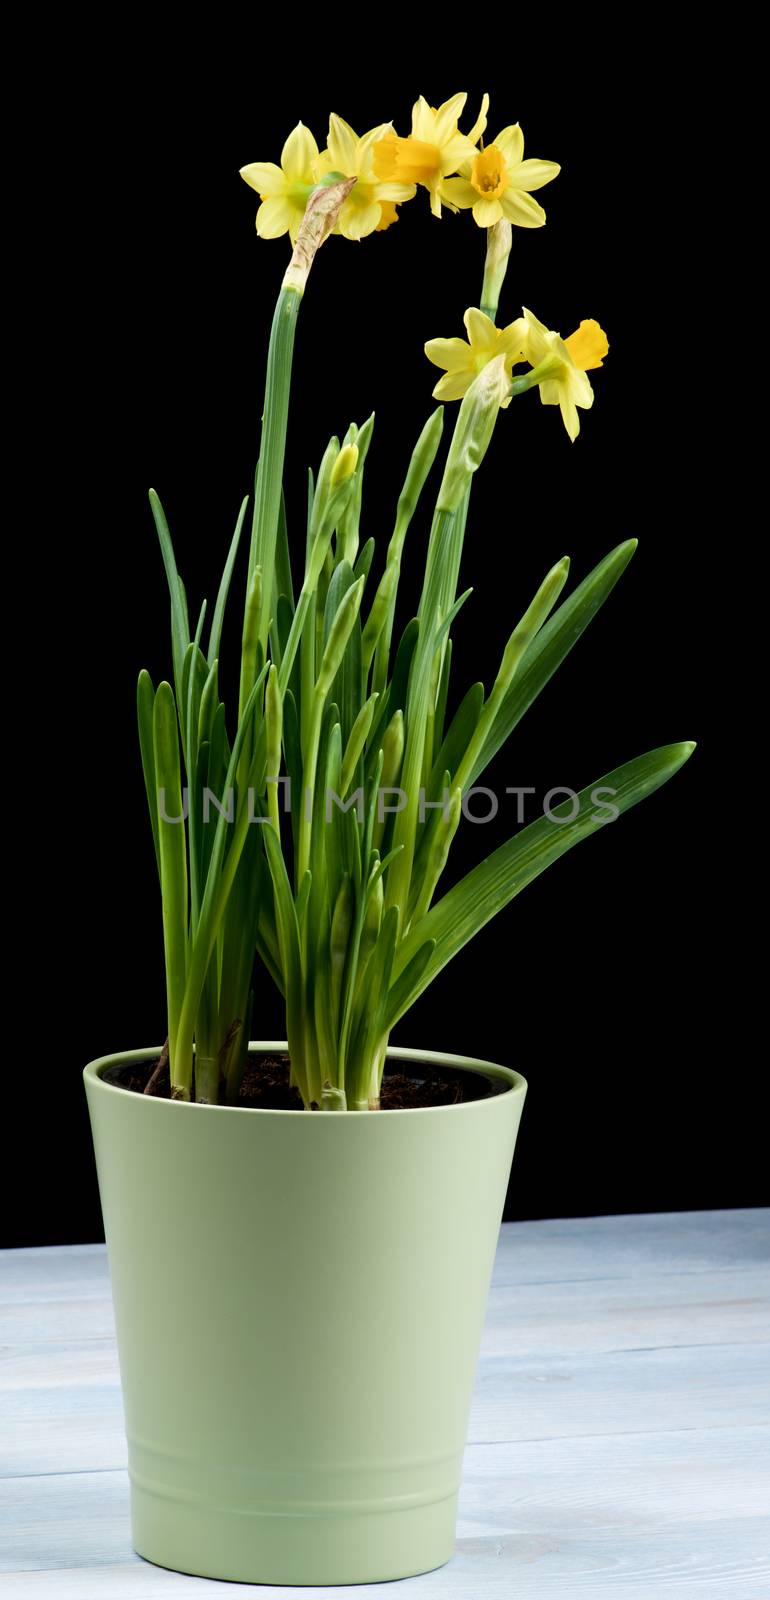 Yellow Daffodils in Pot by zhekos